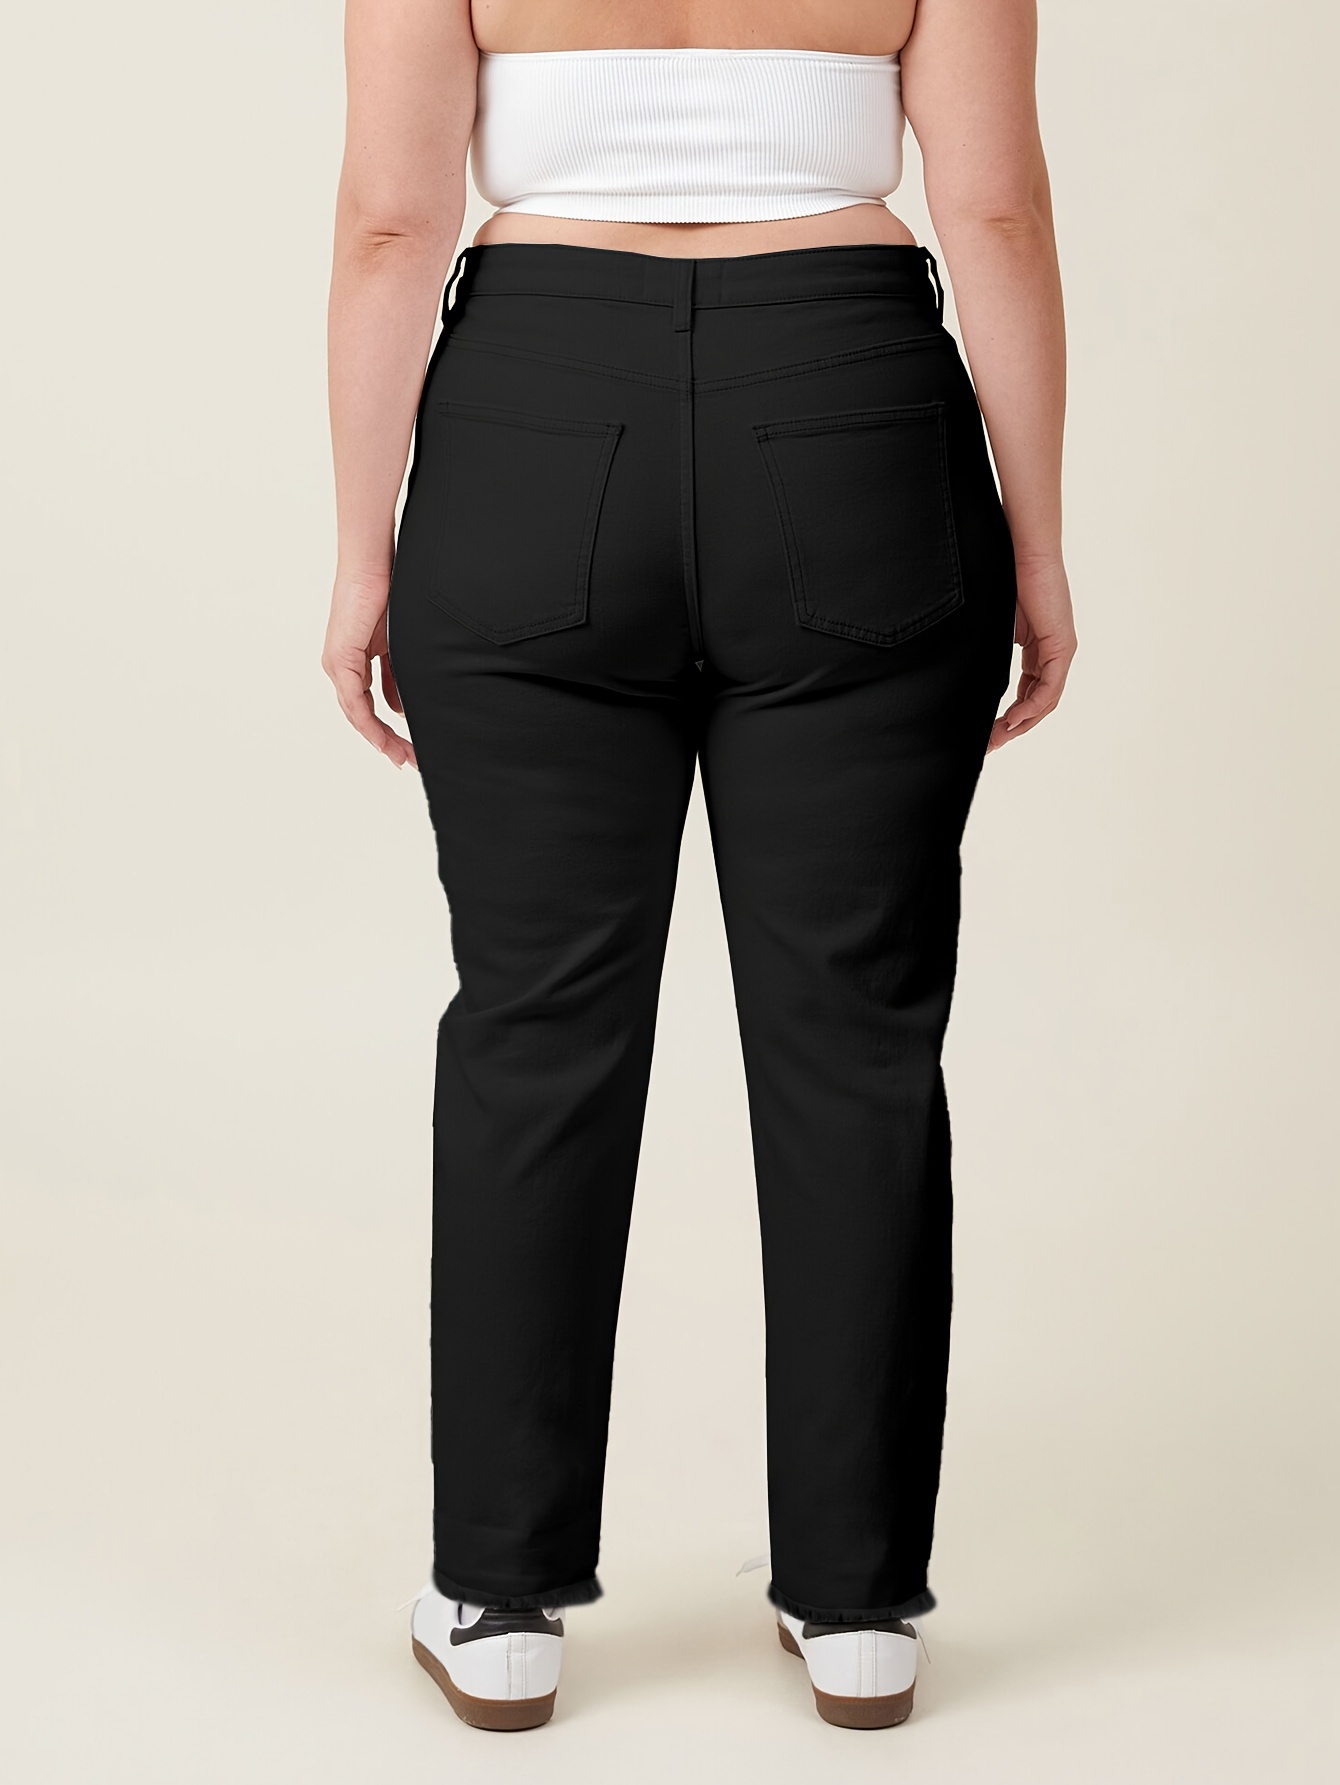 HSMQHJWE Plus Size Business Casual Plus Size Slim Dress Pants